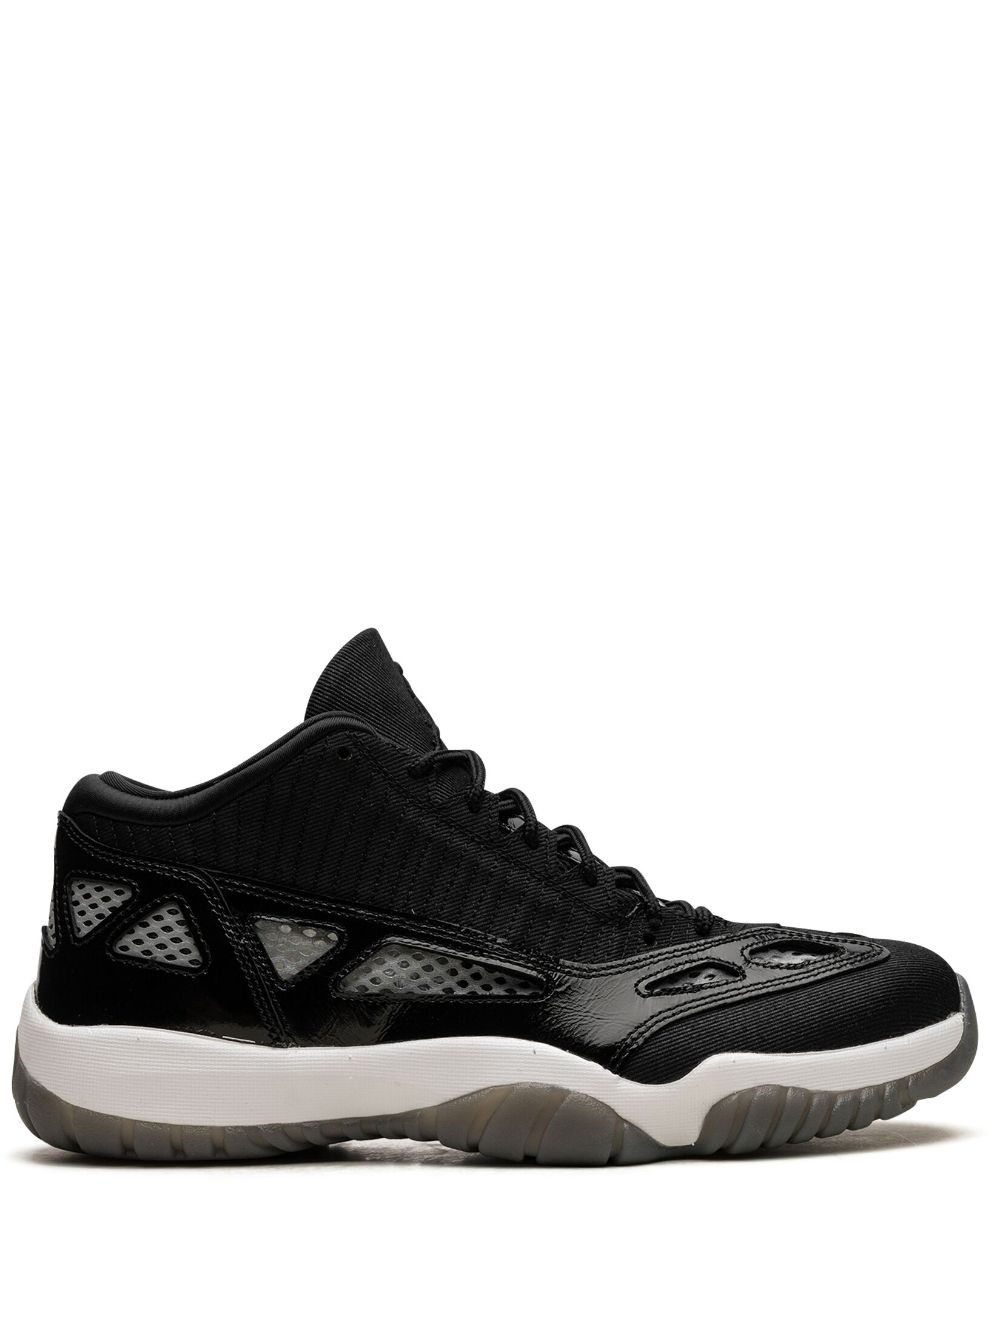 Jordan Air Jordan 11 Low IE "Black/White" sneakers von Jordan